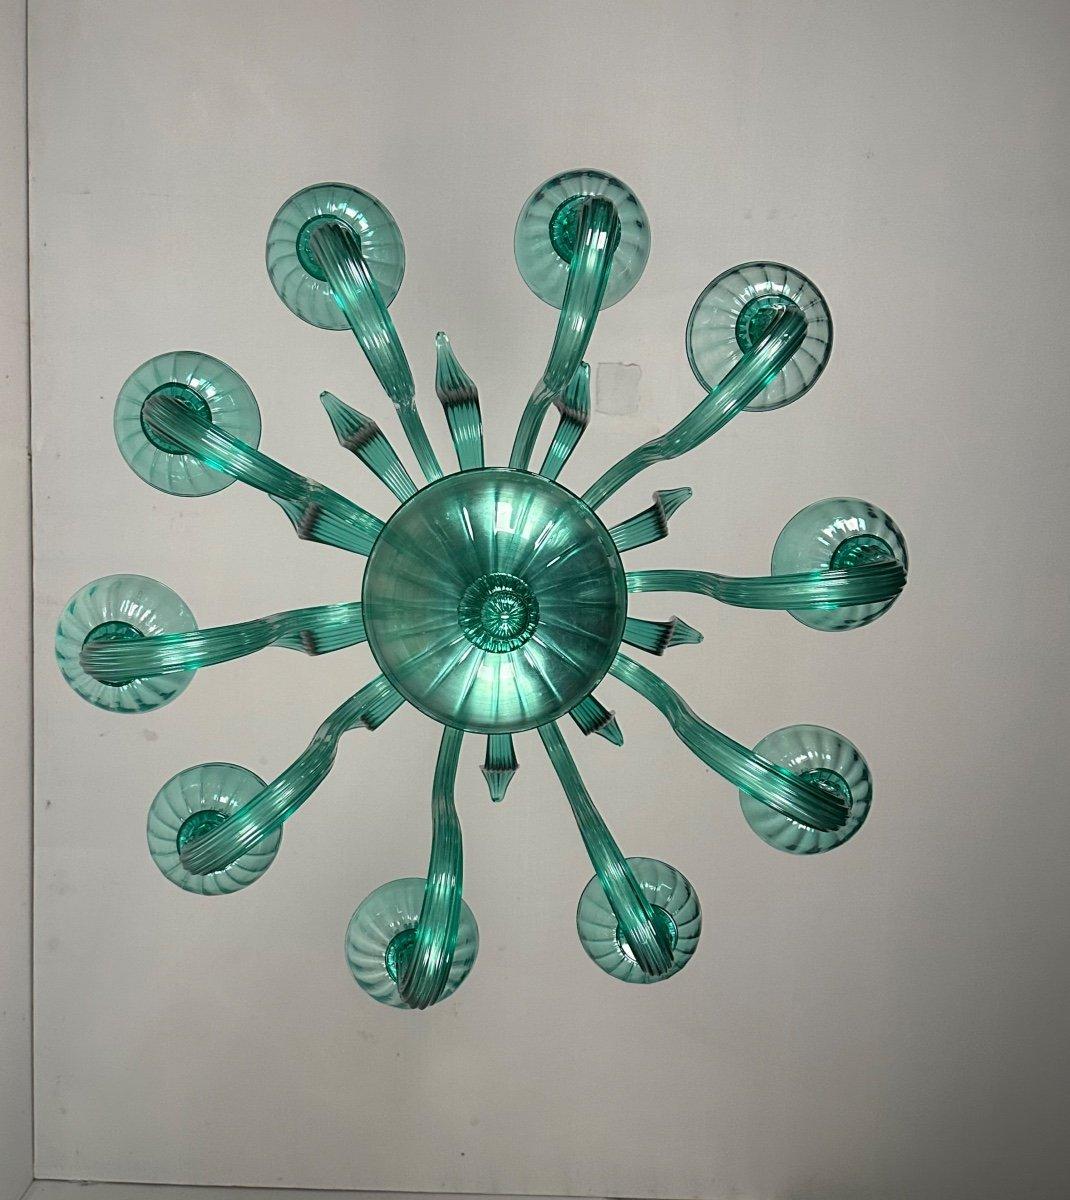 Venetian Emerald Murano Glass Chandelier 10 Arms of Light, new electrification